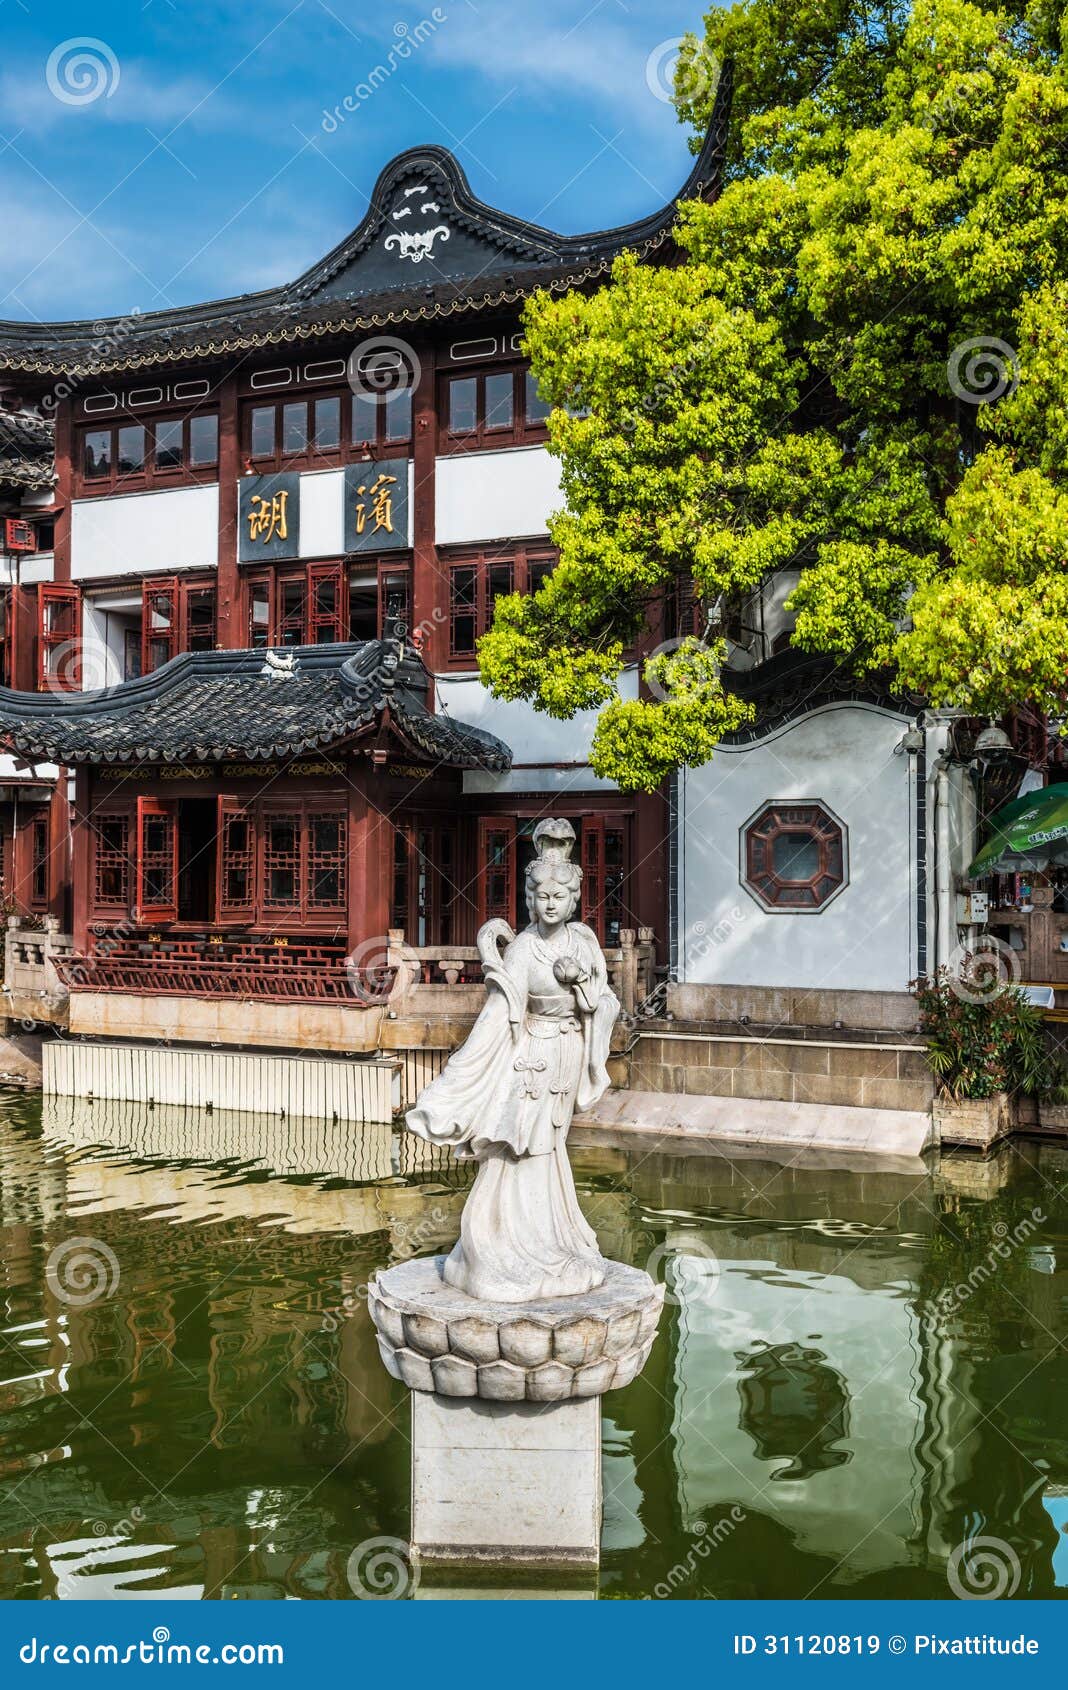 statue on a pond in fang bang zhong lu old city shanghai china